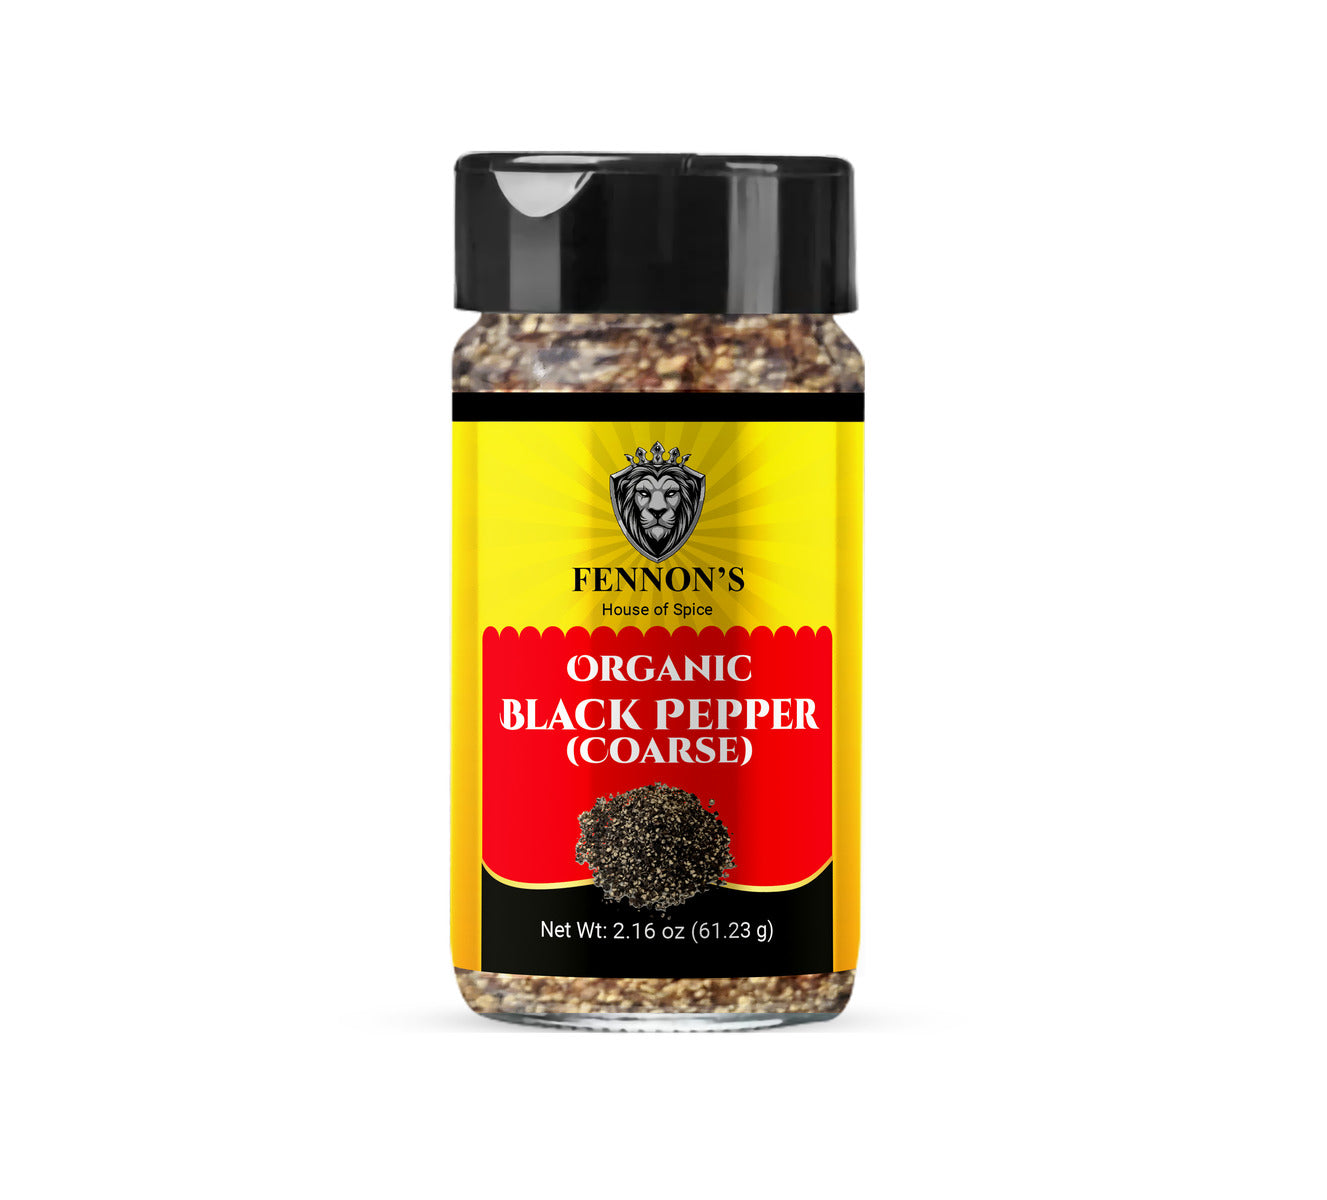 Buy Crushed Black Pepper Online